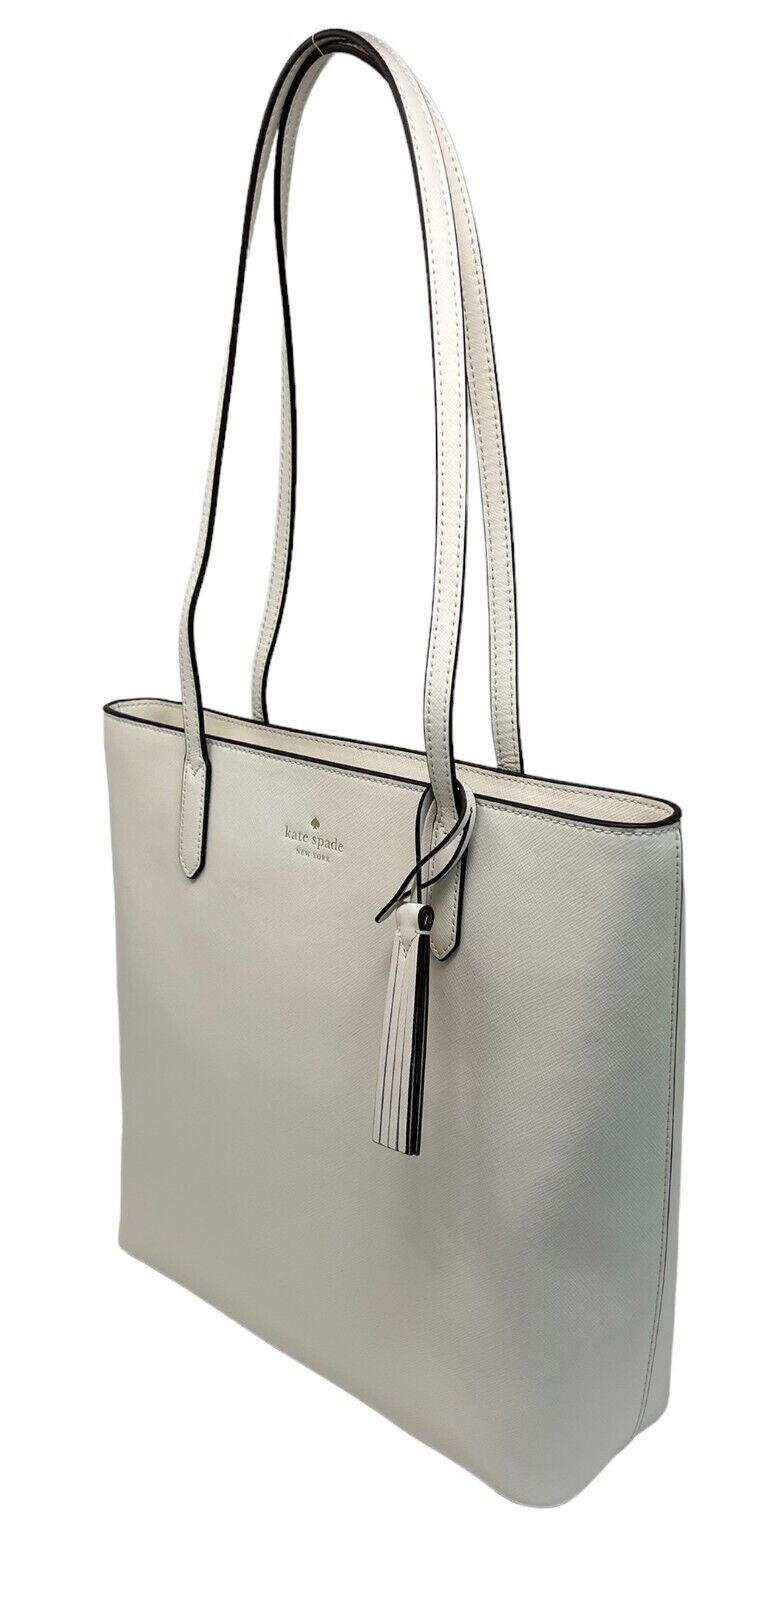 Kate Spade Jana Tote Parchment Saffiano Leather Handbag K8150 $359